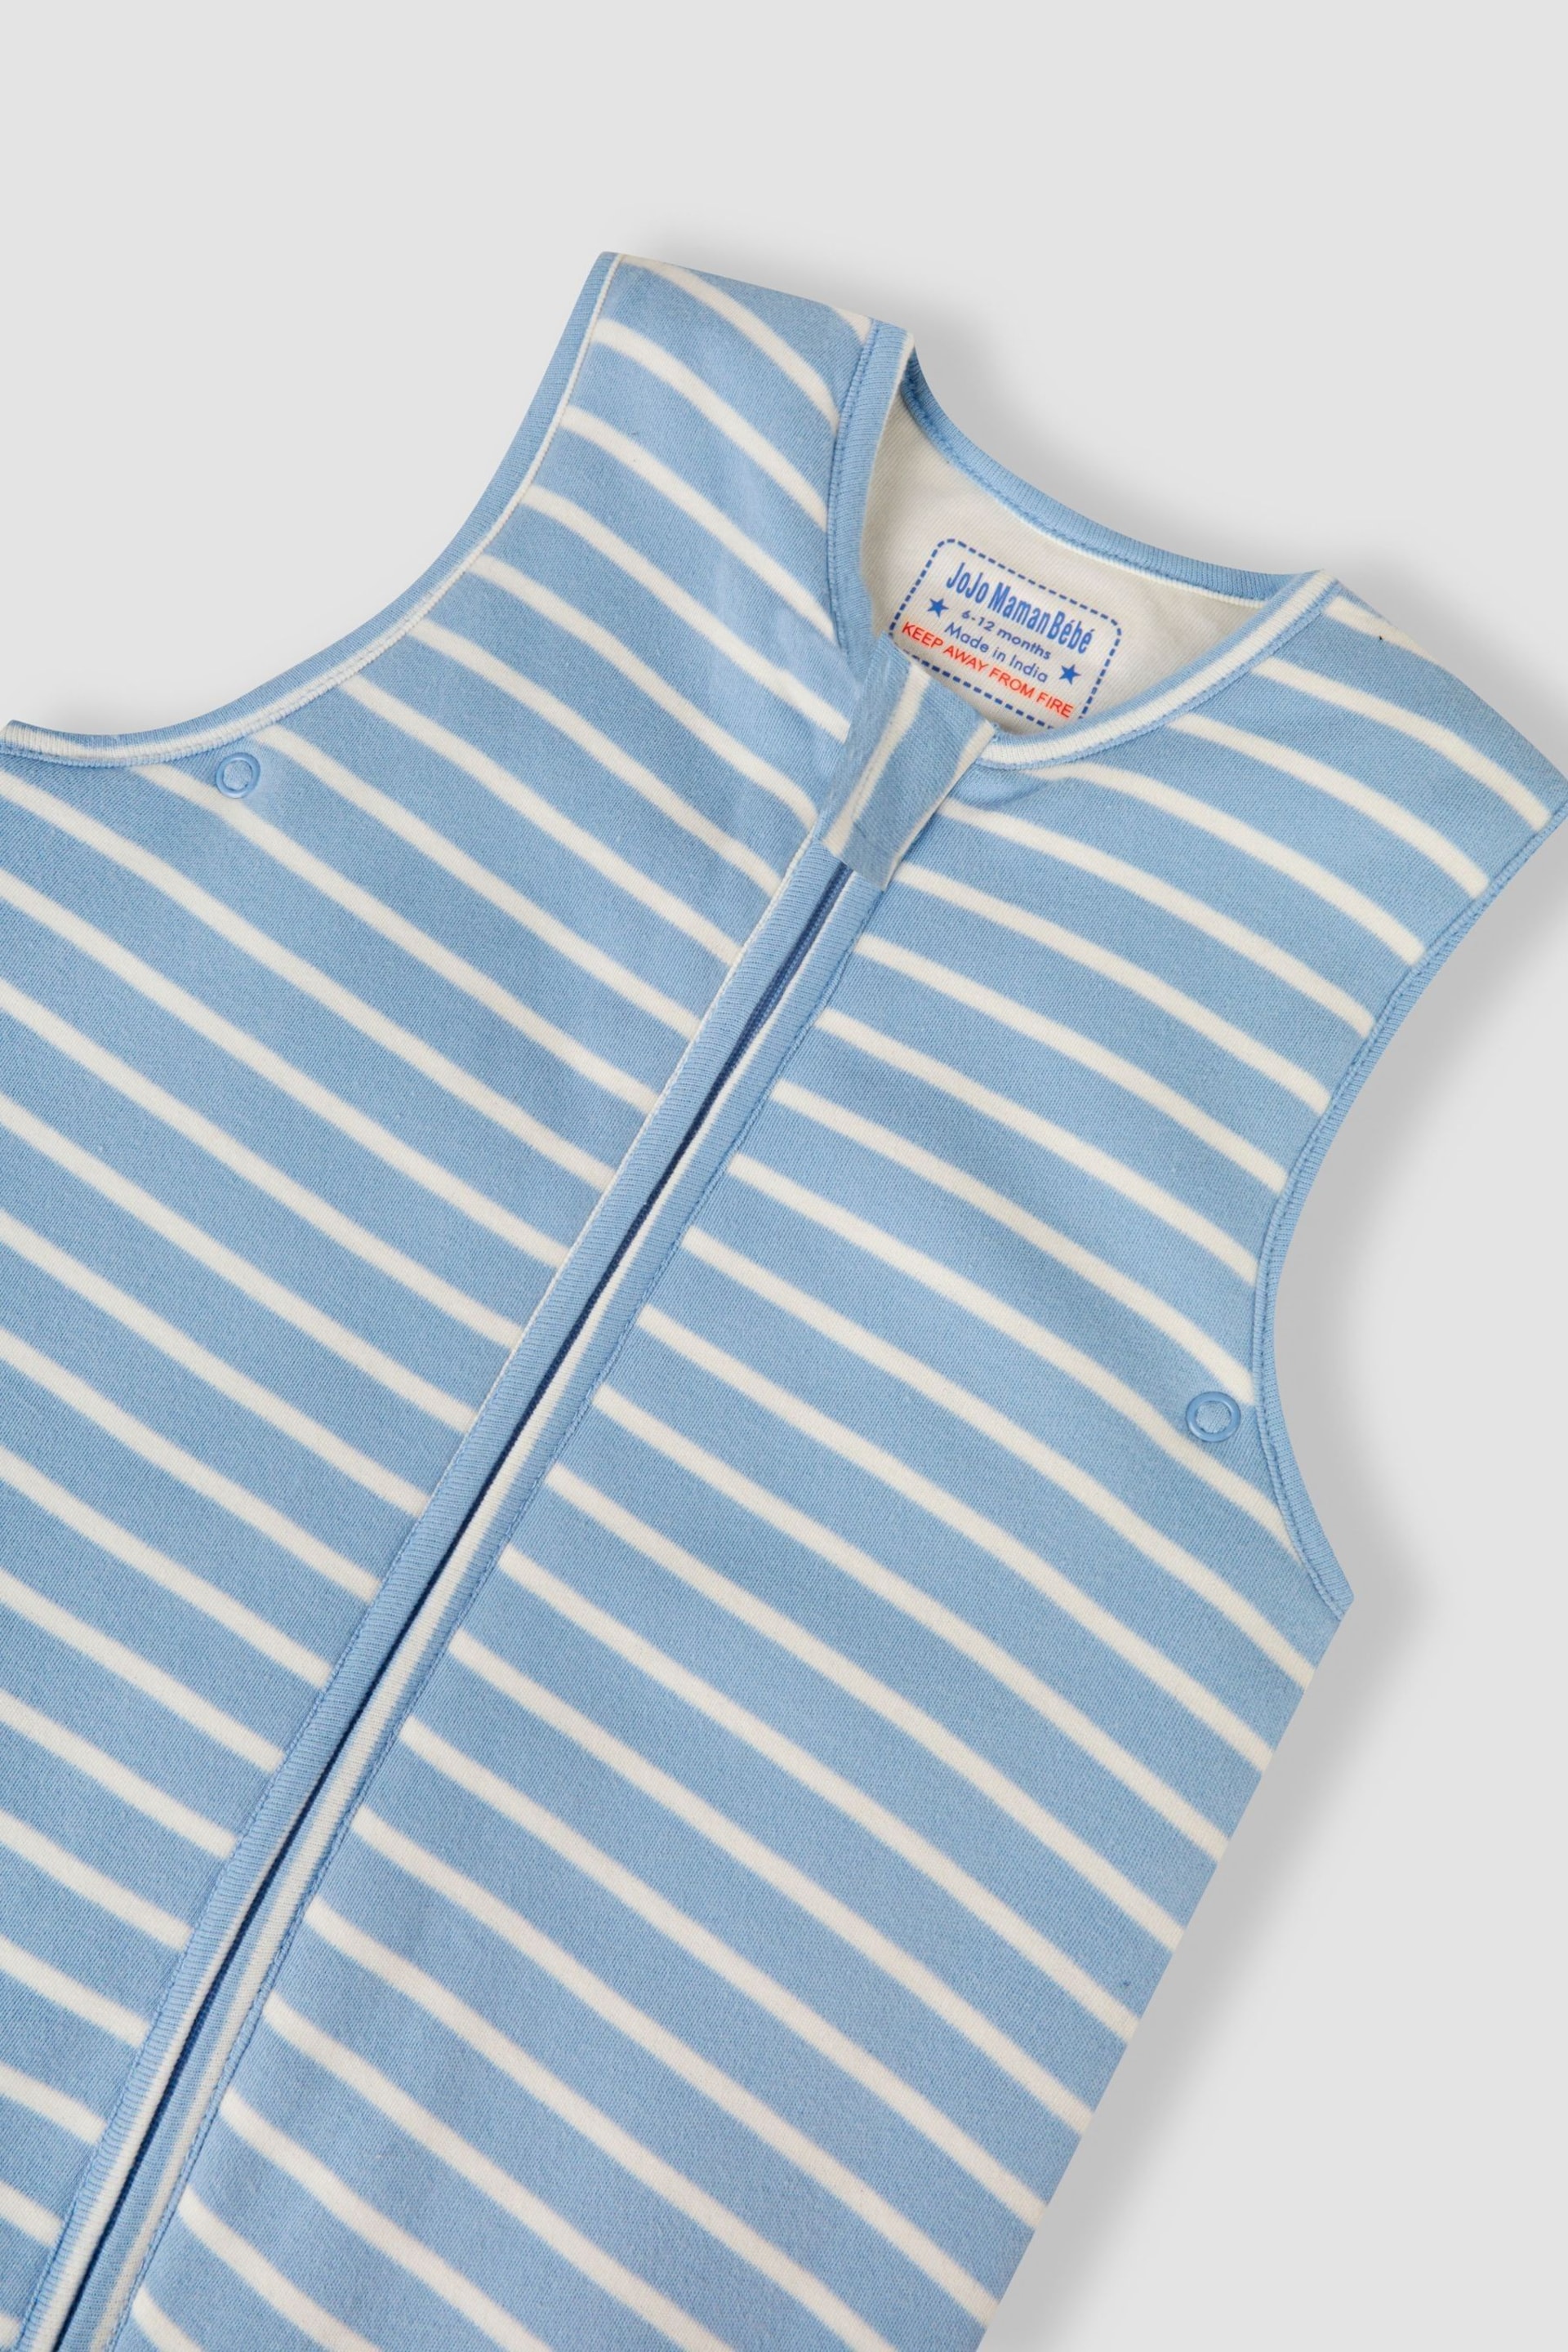 JoJo Maman Bébé Blue Stripe 1.5 Tog Sleep Snuggler - Image 6 of 6